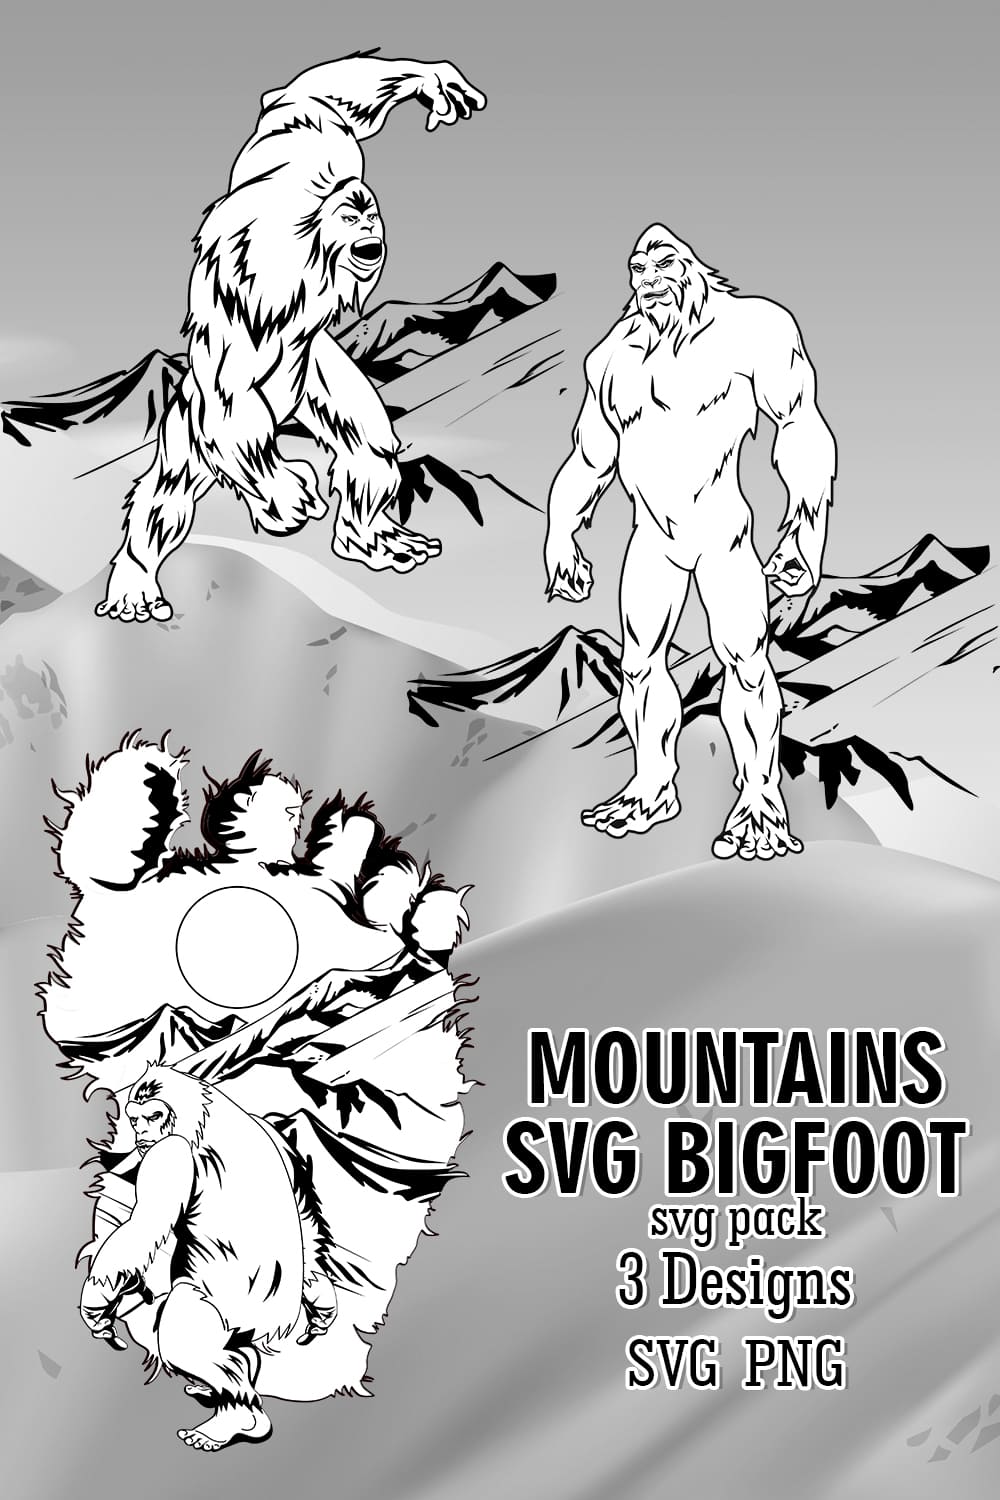 Mountains SVG Bigfoot pinterest image preview.